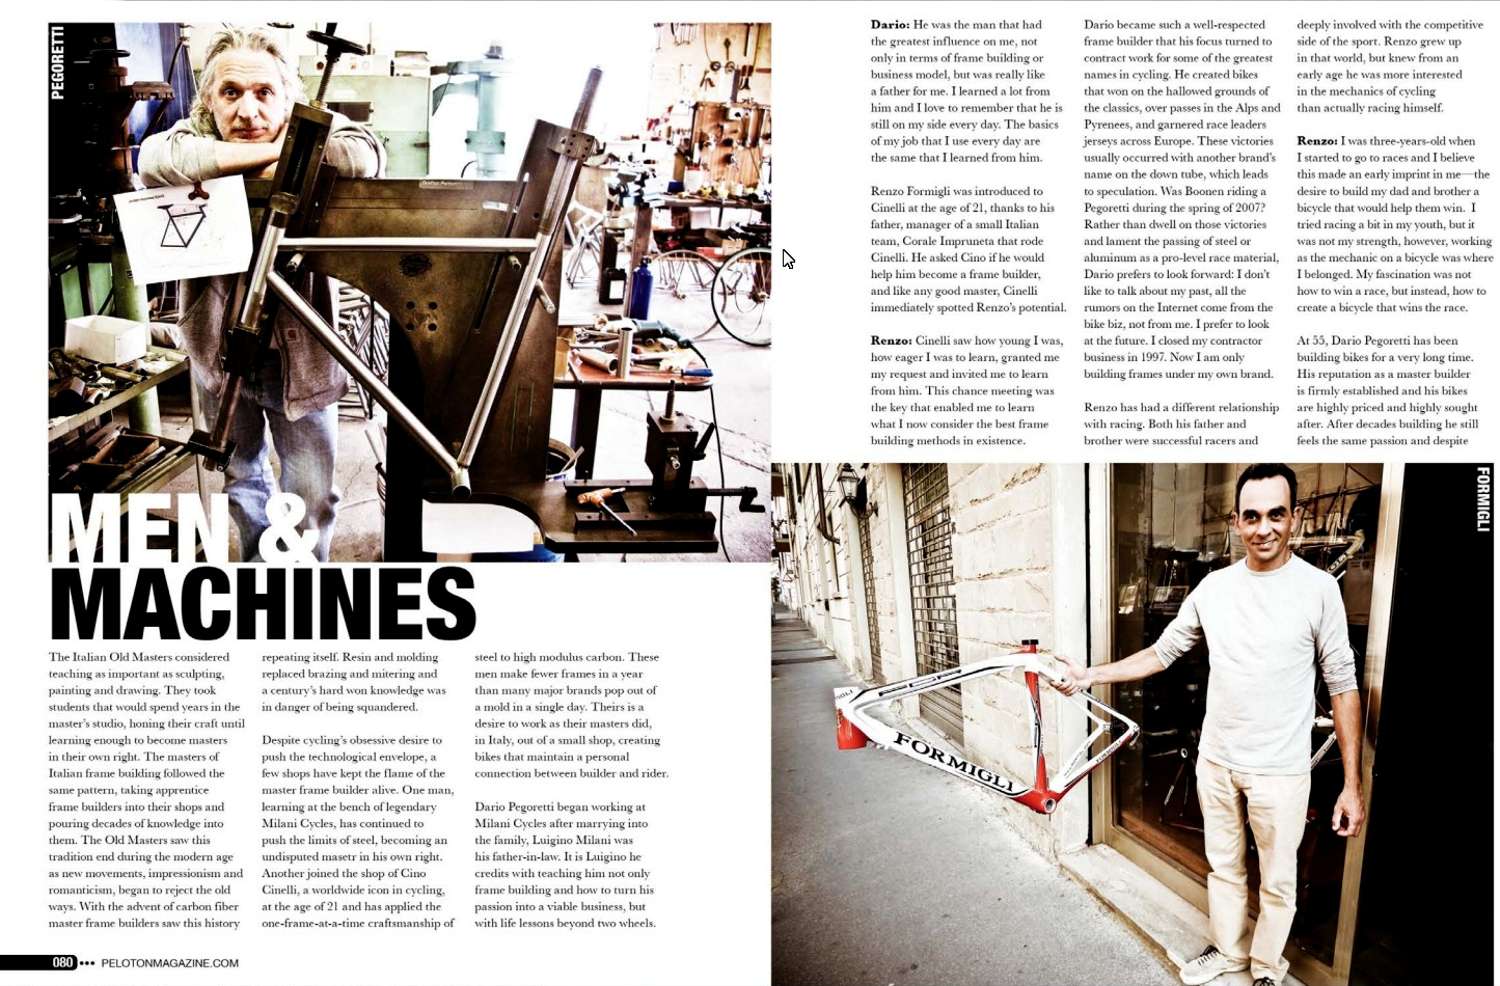 Men and Machines from Peloton Magazine.